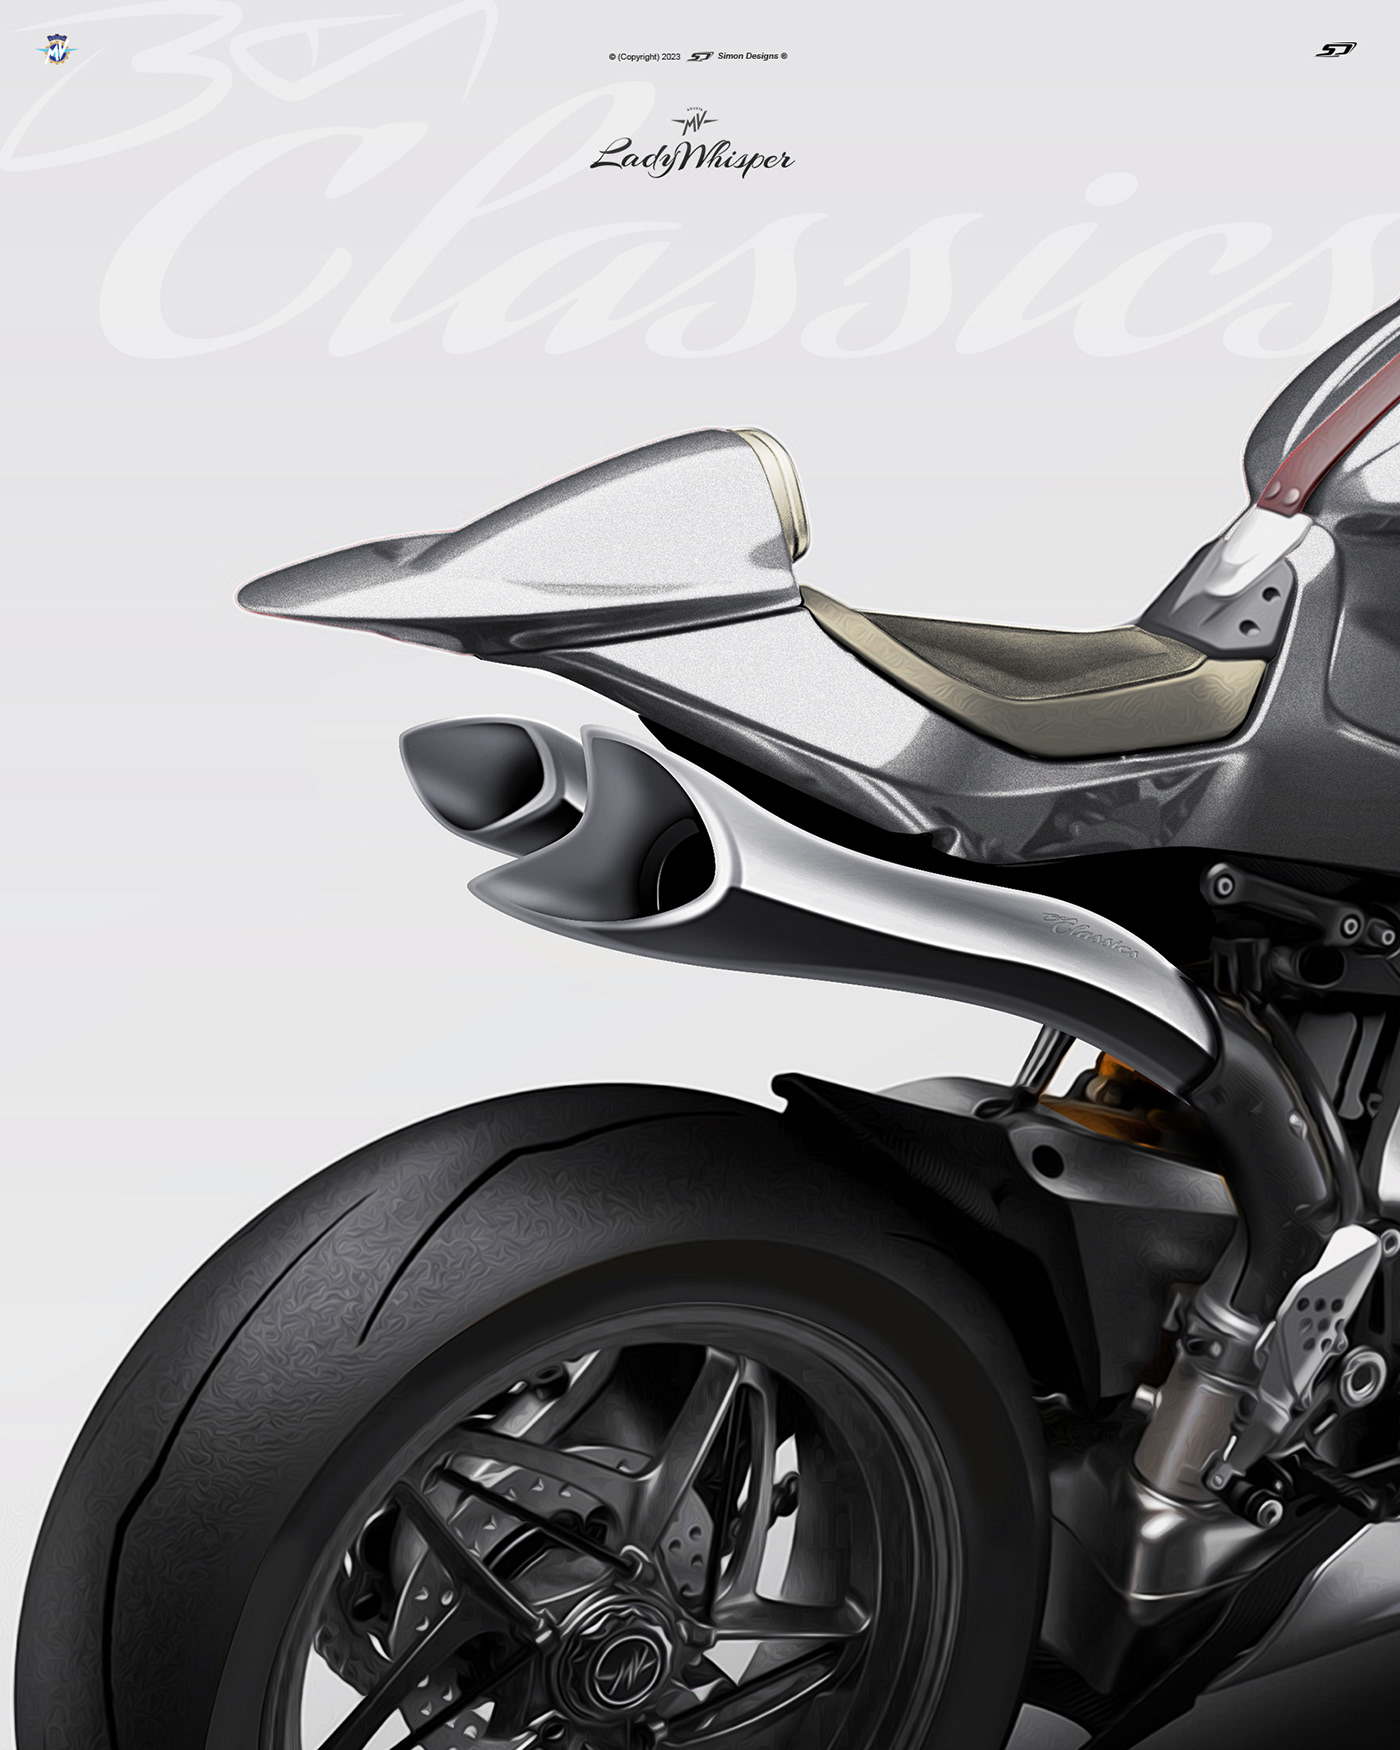 Simon Designs designer mv agusta mv agusta motorcycle superveloce 1000 boa exhaust motorcycle art mv agusta superveloce the lady whisper